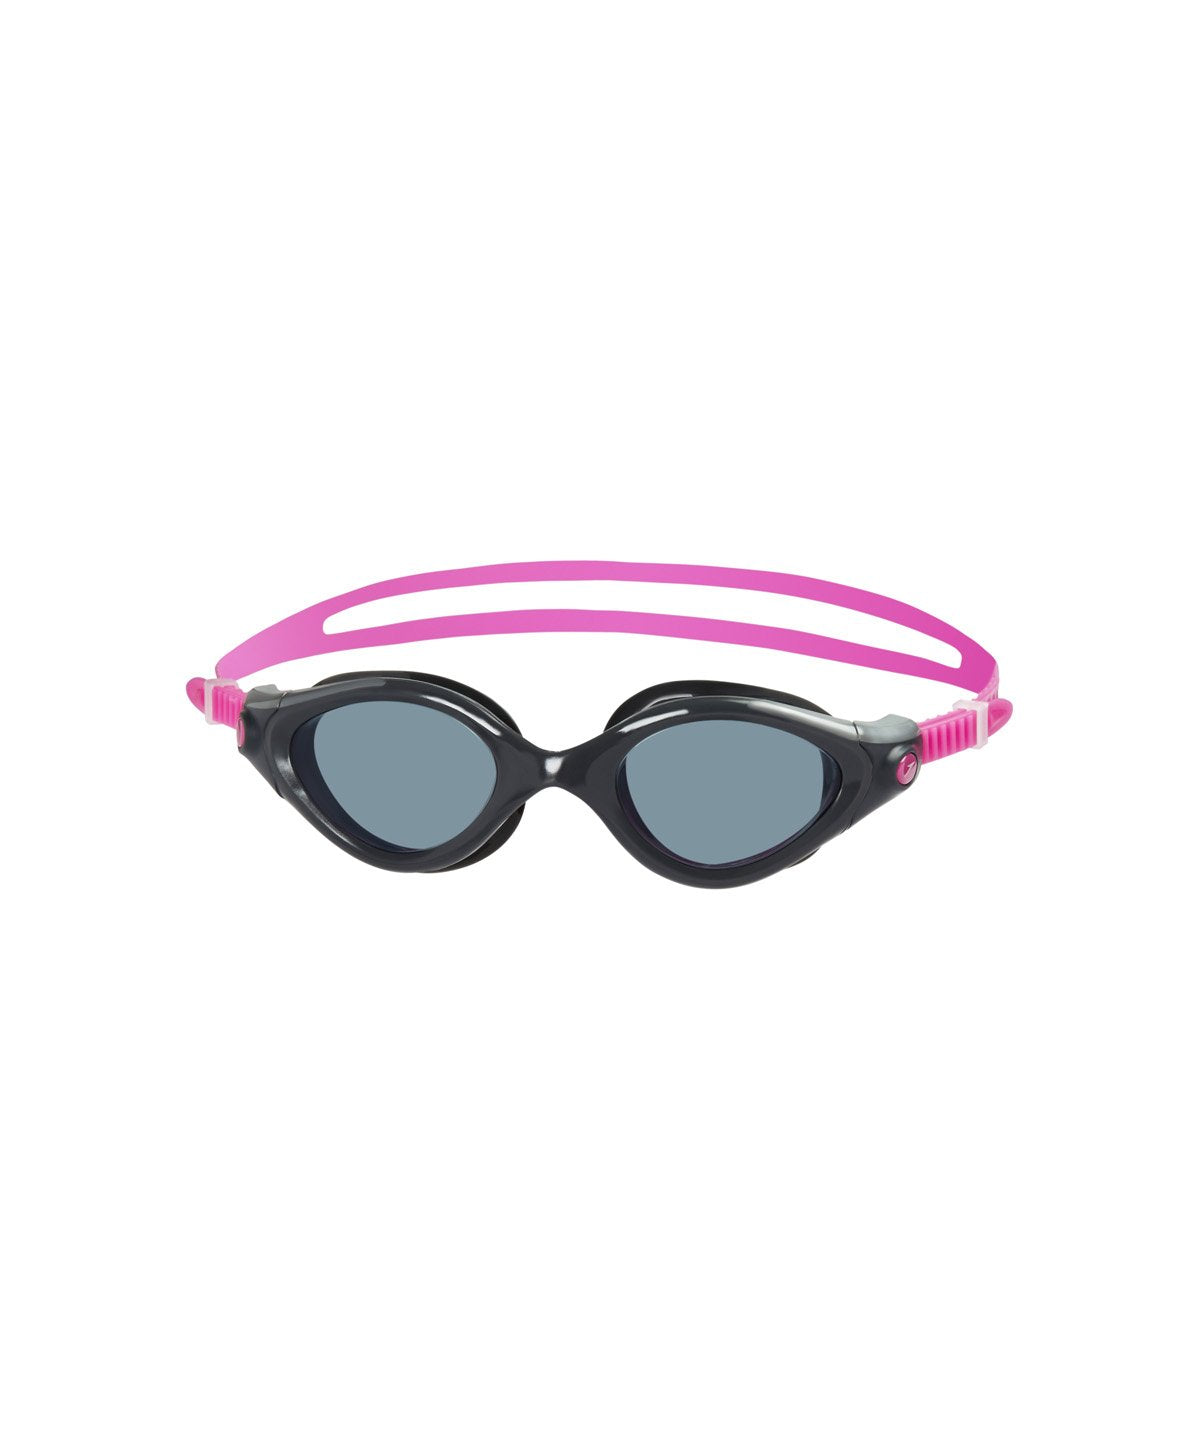 Speedo Female-Adult Futura BioFUSE Female Goggles (Pink/Smoke) - Best Price online Prokicksports.com